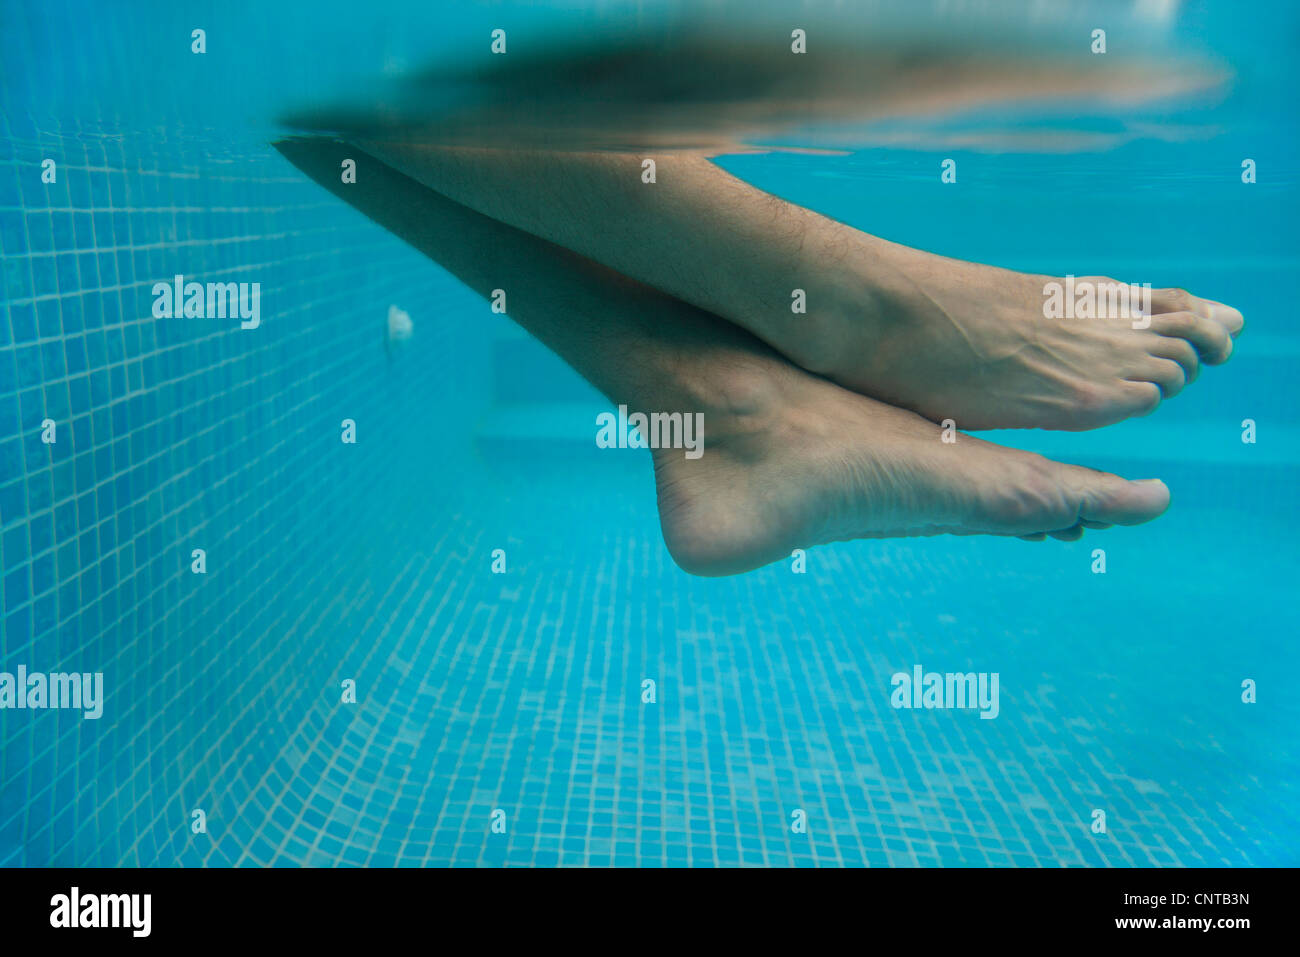 Man's legs in water, underwater view Stock Photo